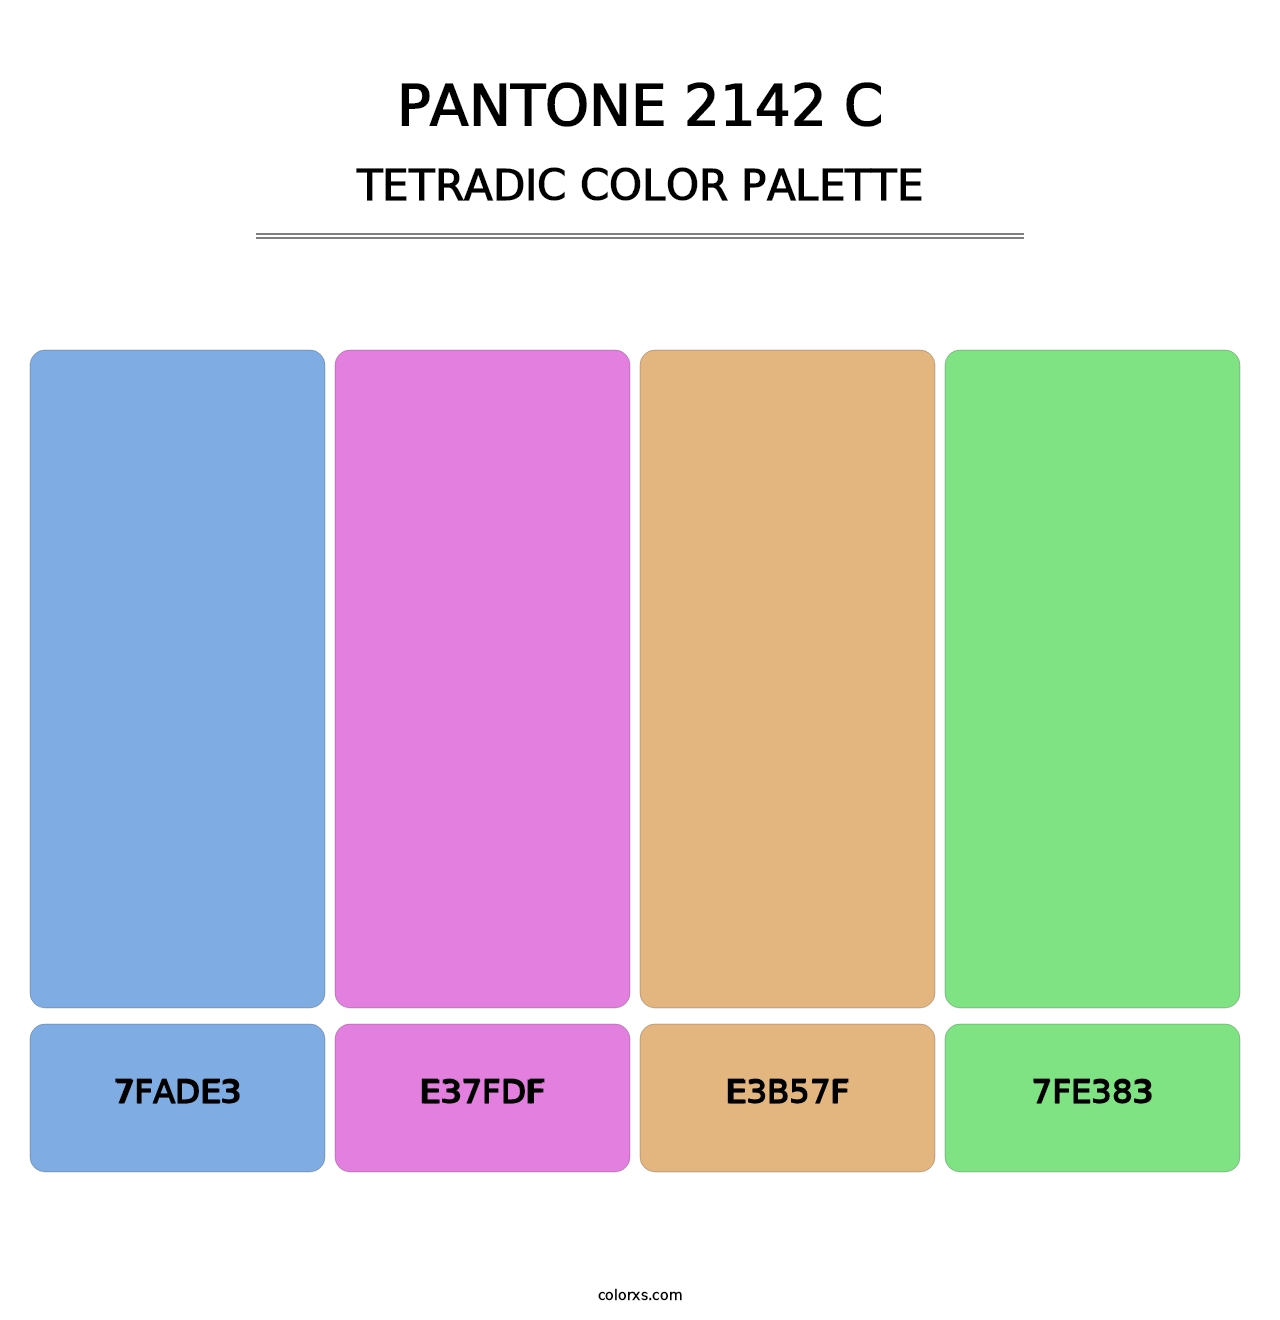 PANTONE 2142 C - Tetradic Color Palette